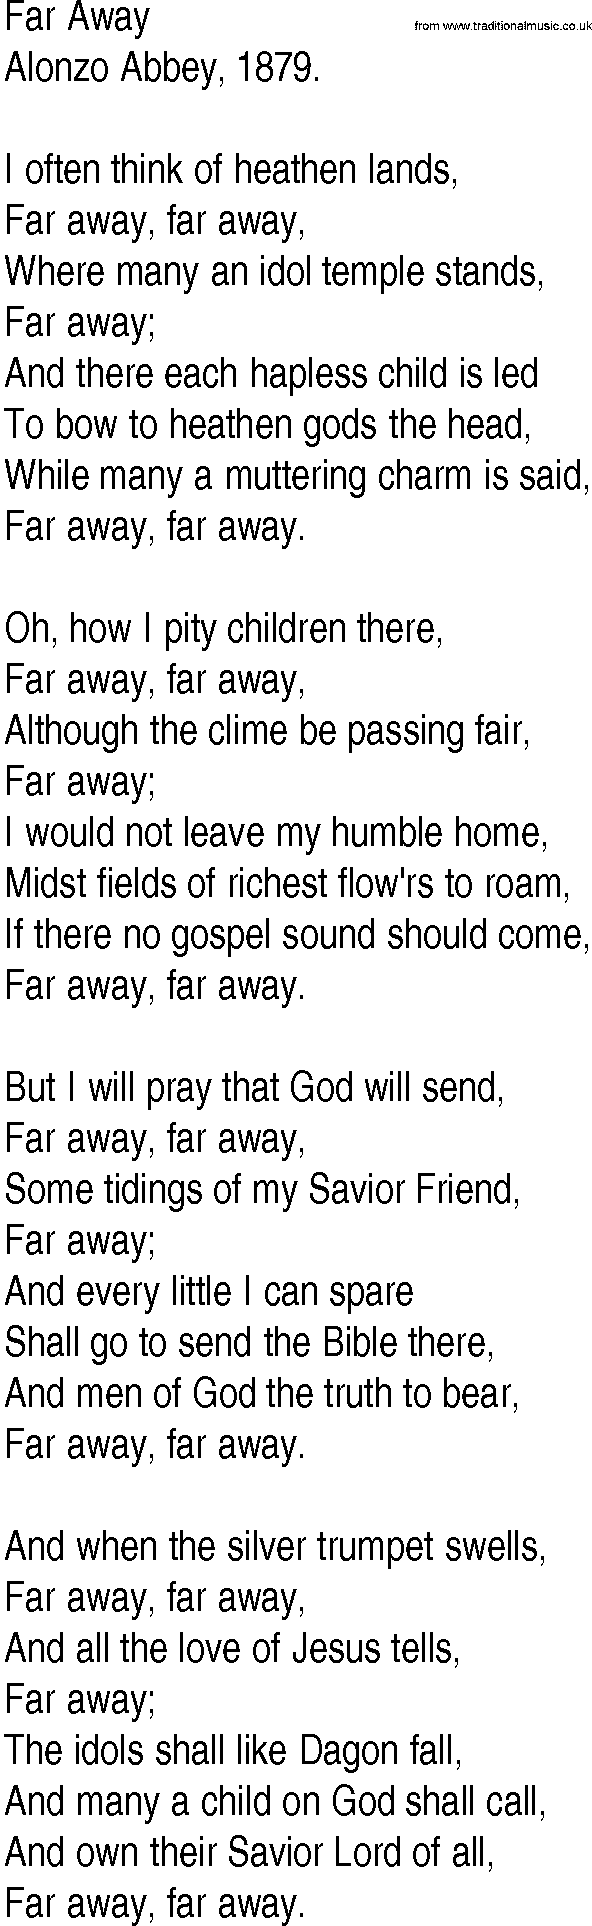 Hymn and Gospel Song: Far Away by Alonzo Abbey lyrics